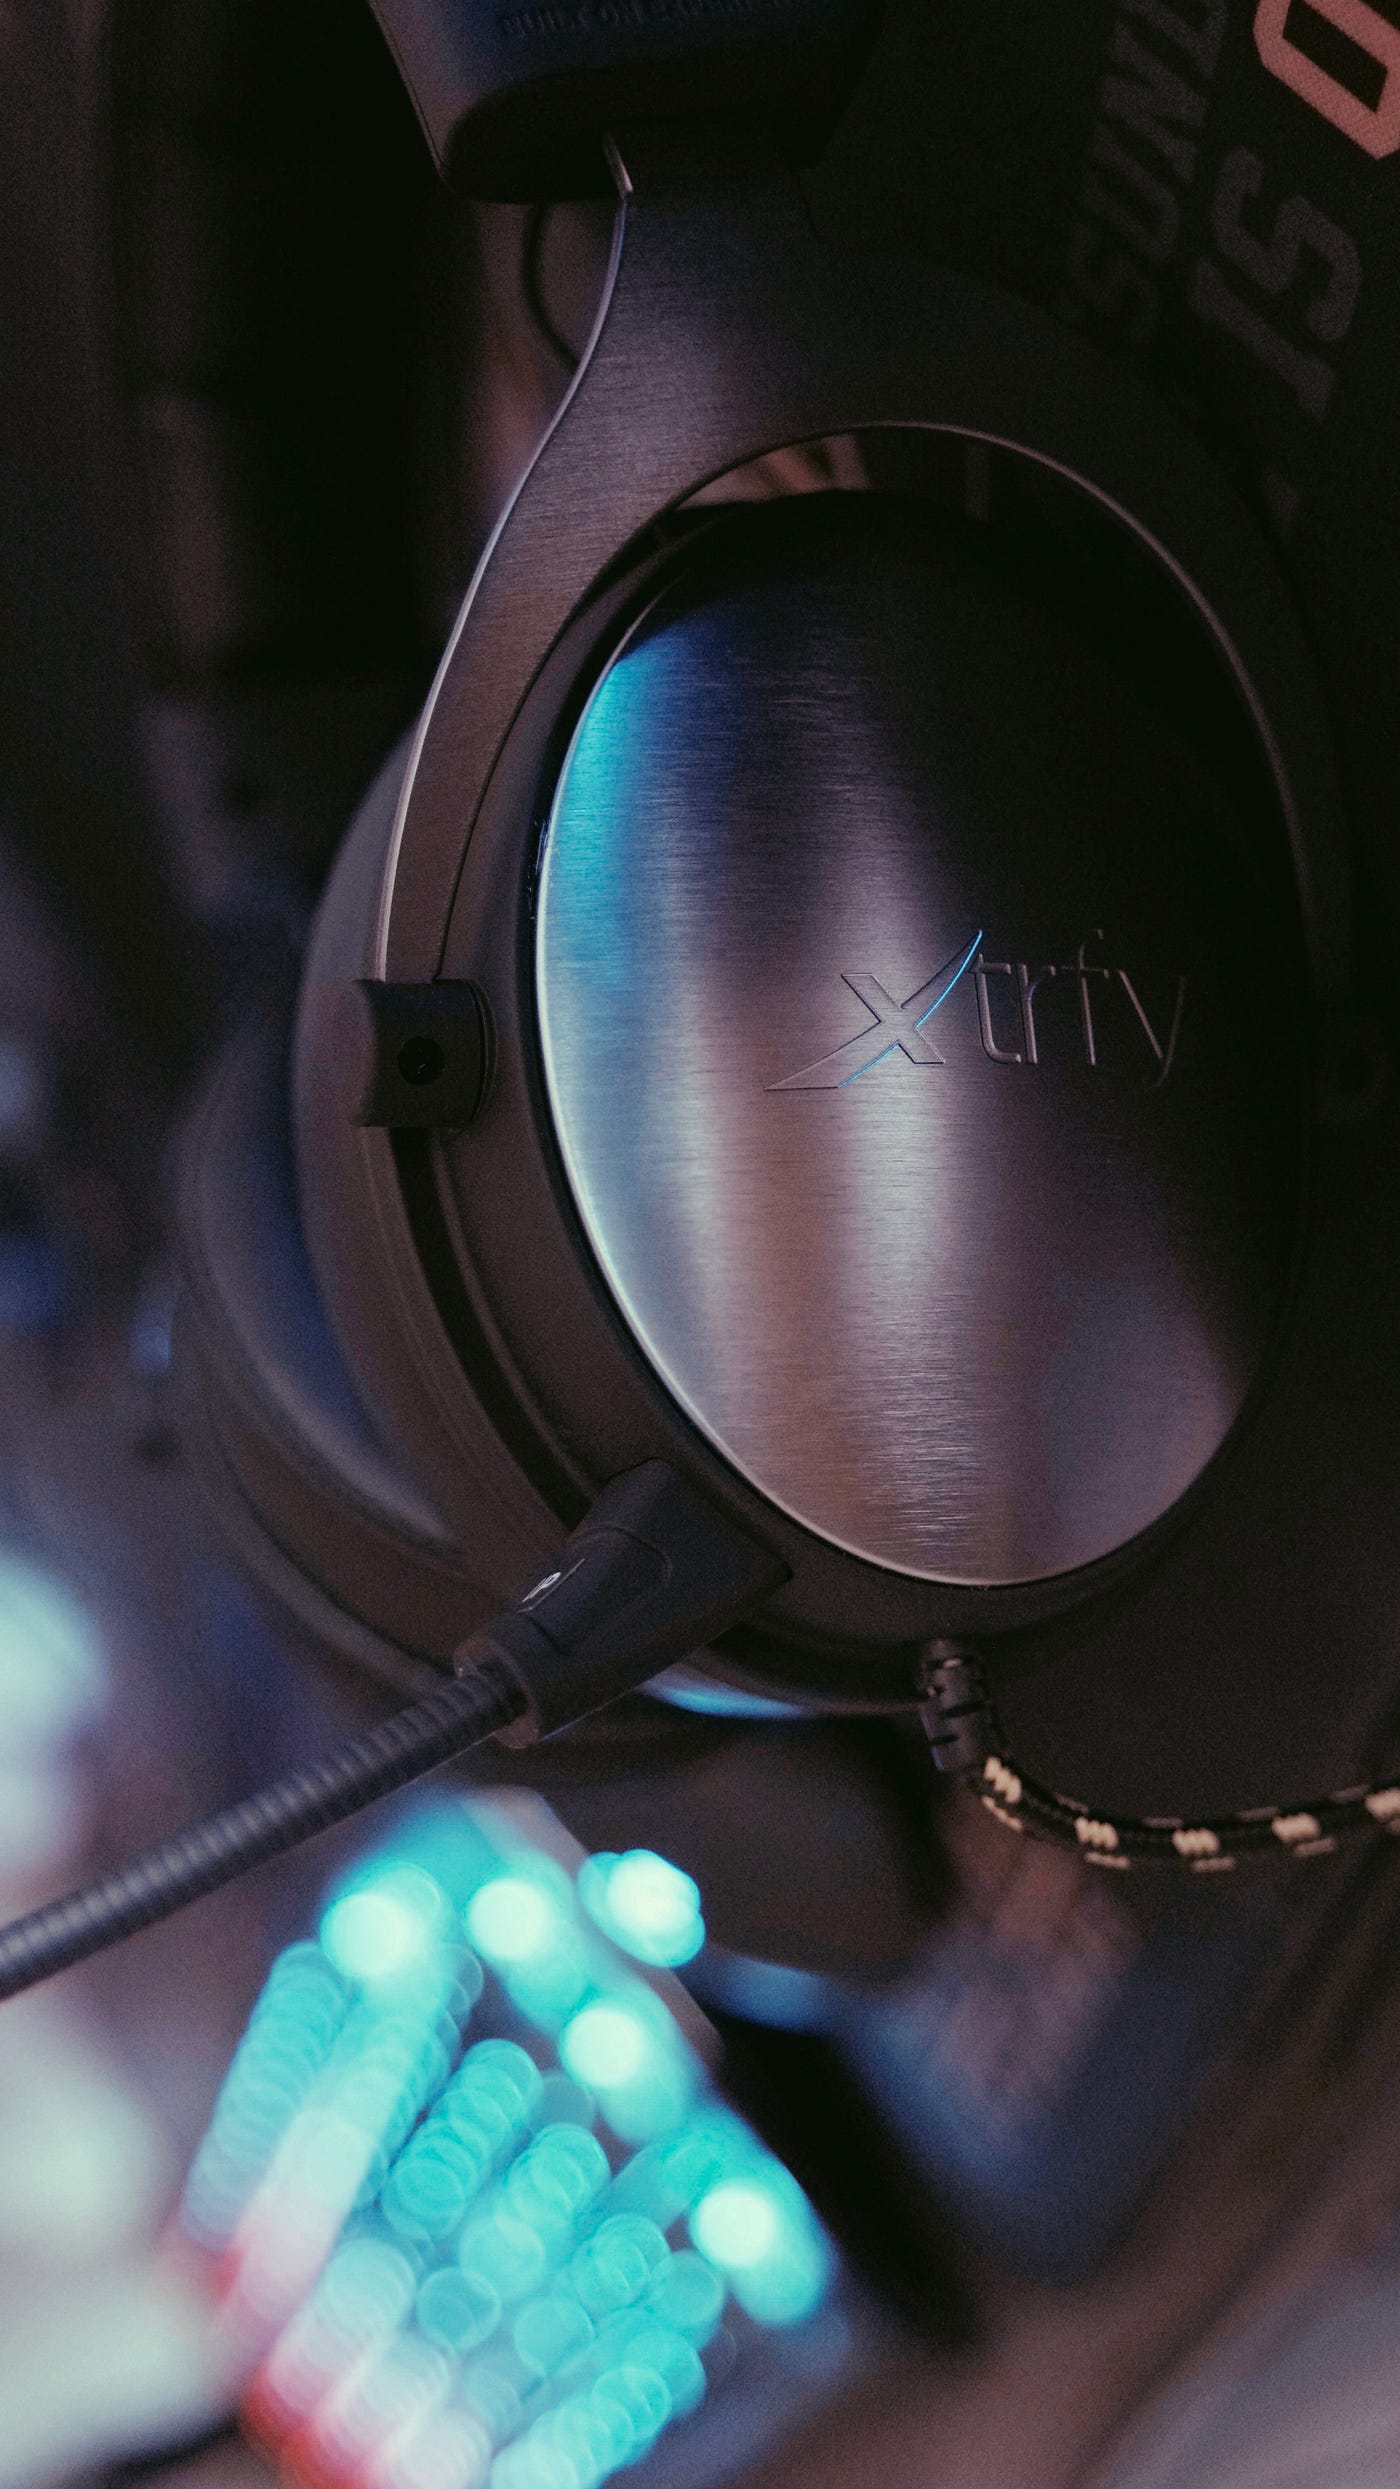 Xtrfy H1 Review. The Xtrfy H1 headset has been around… | by Samuel Adhitya  | Medium